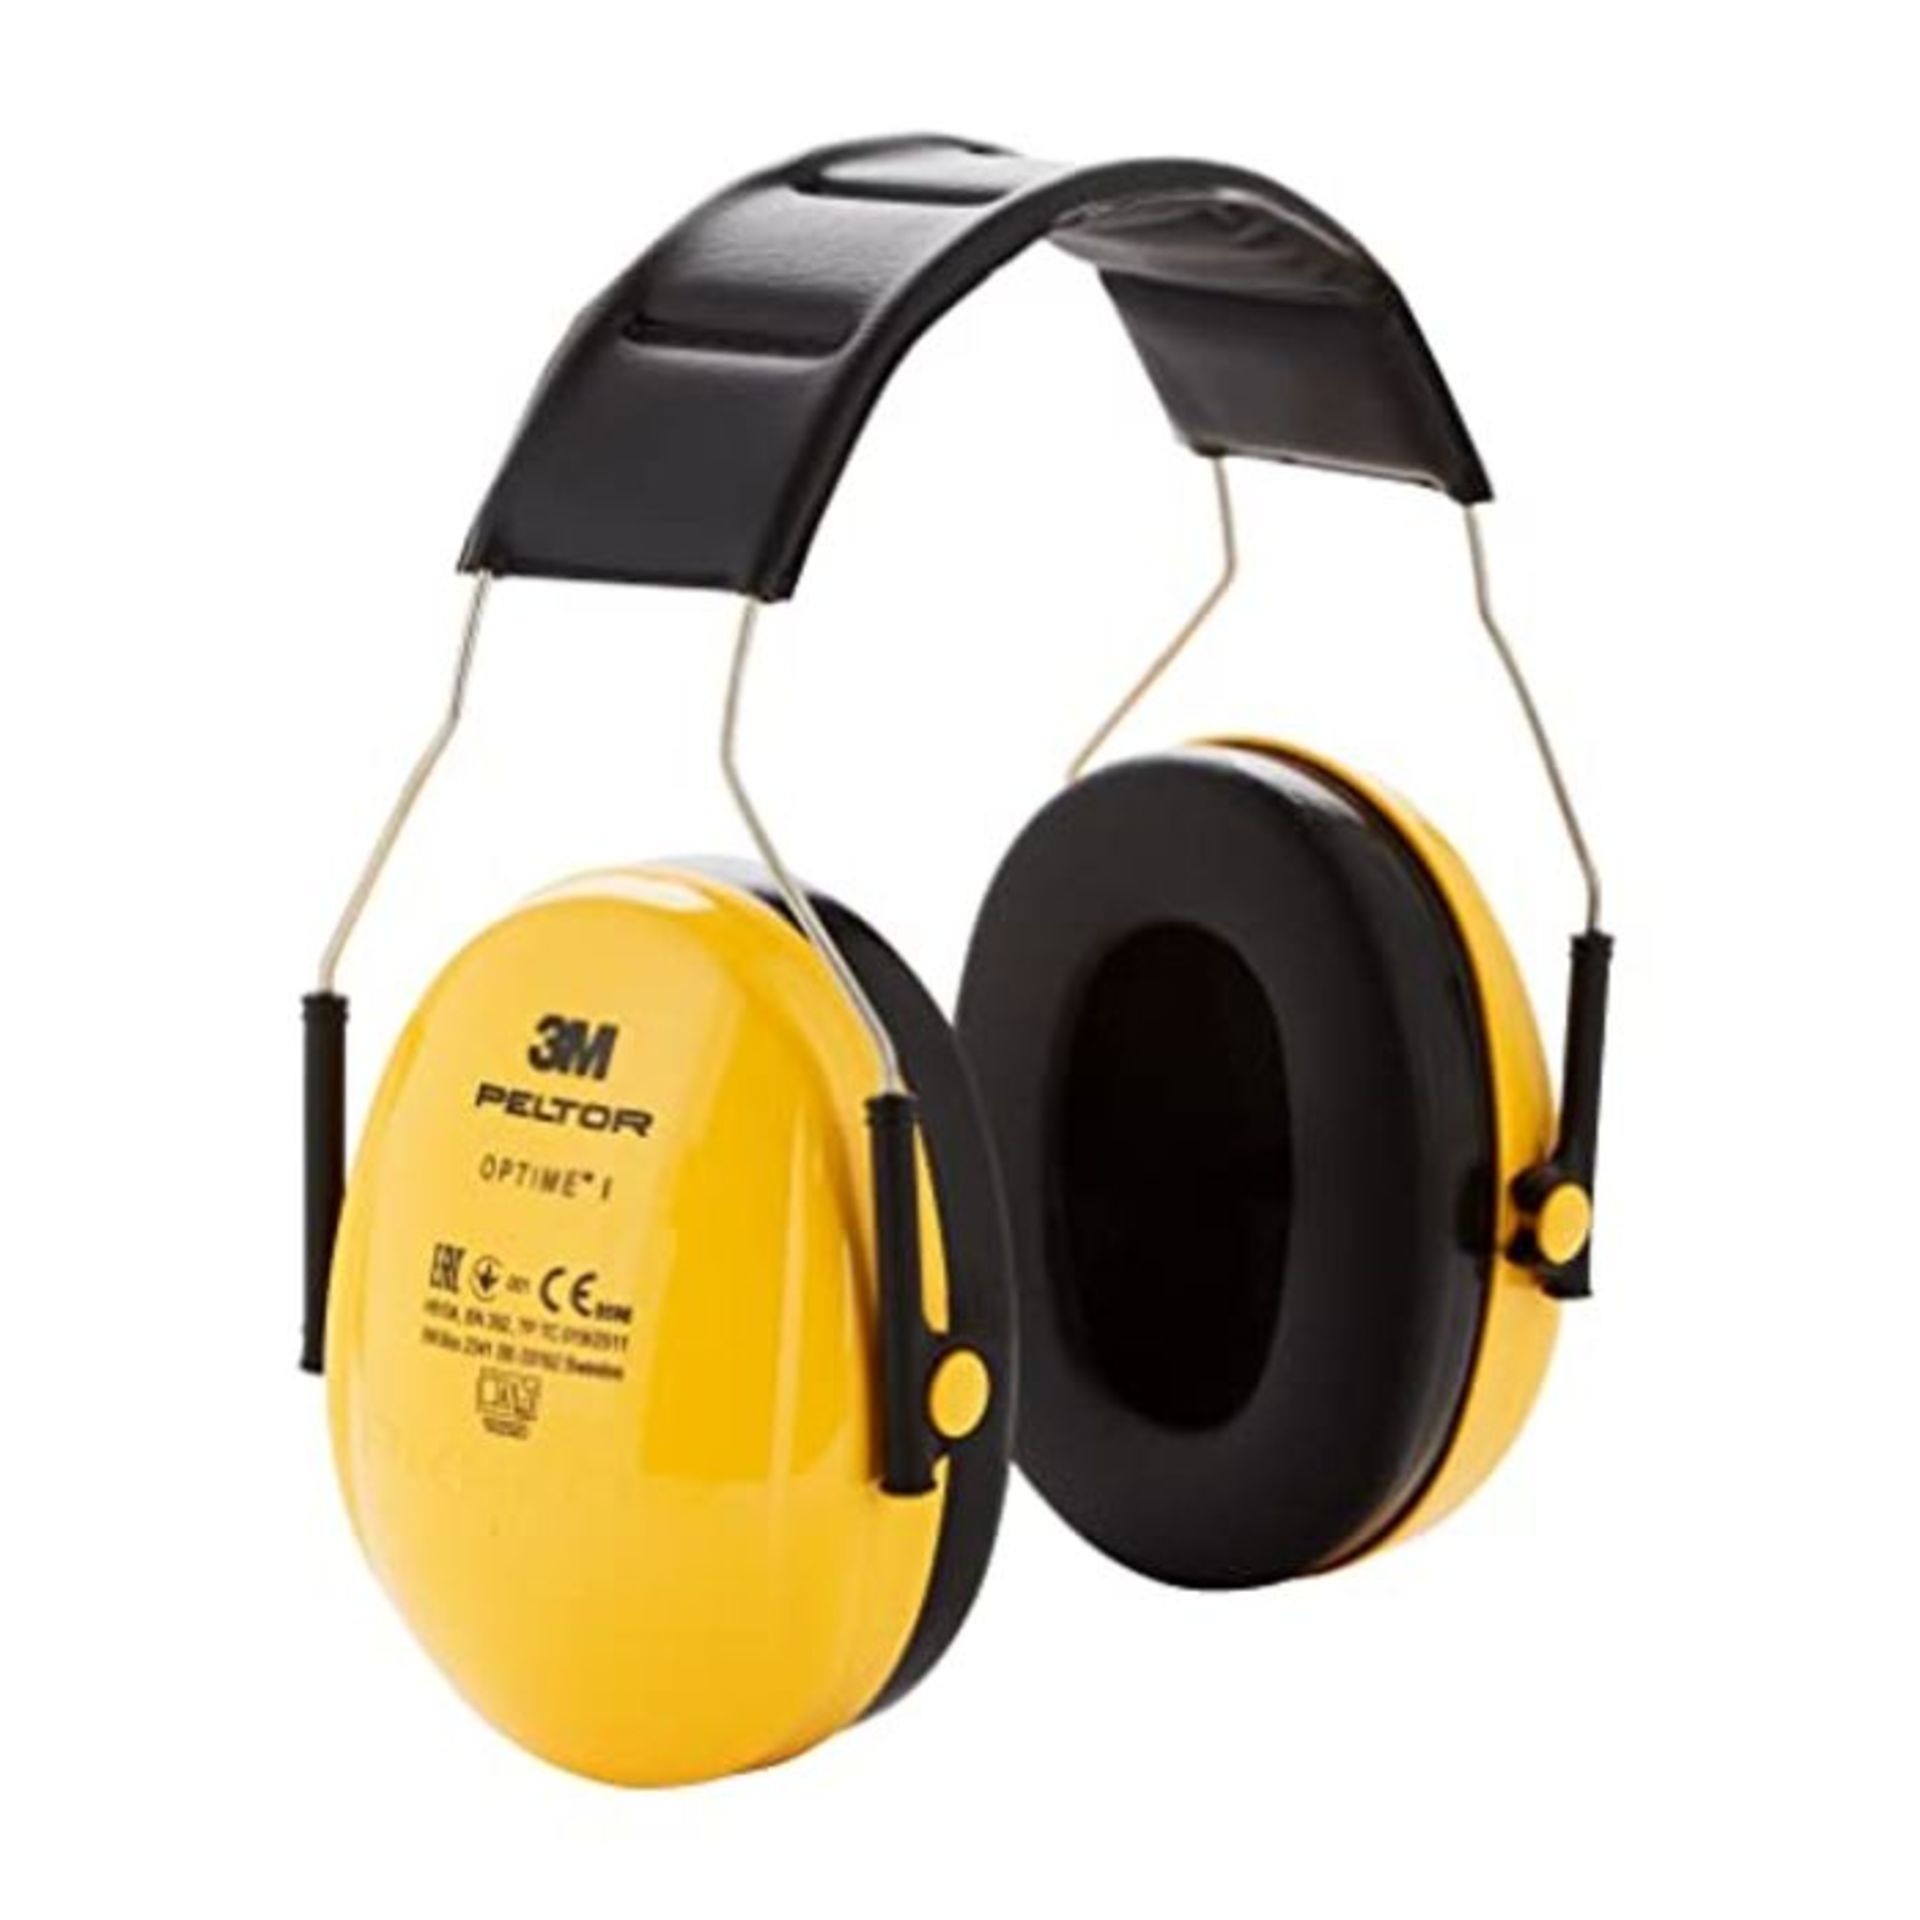 3M Peltor Optime I, H510AC1, Ear Muffs Headband, Lightweight Ear defender, Hearing Pro